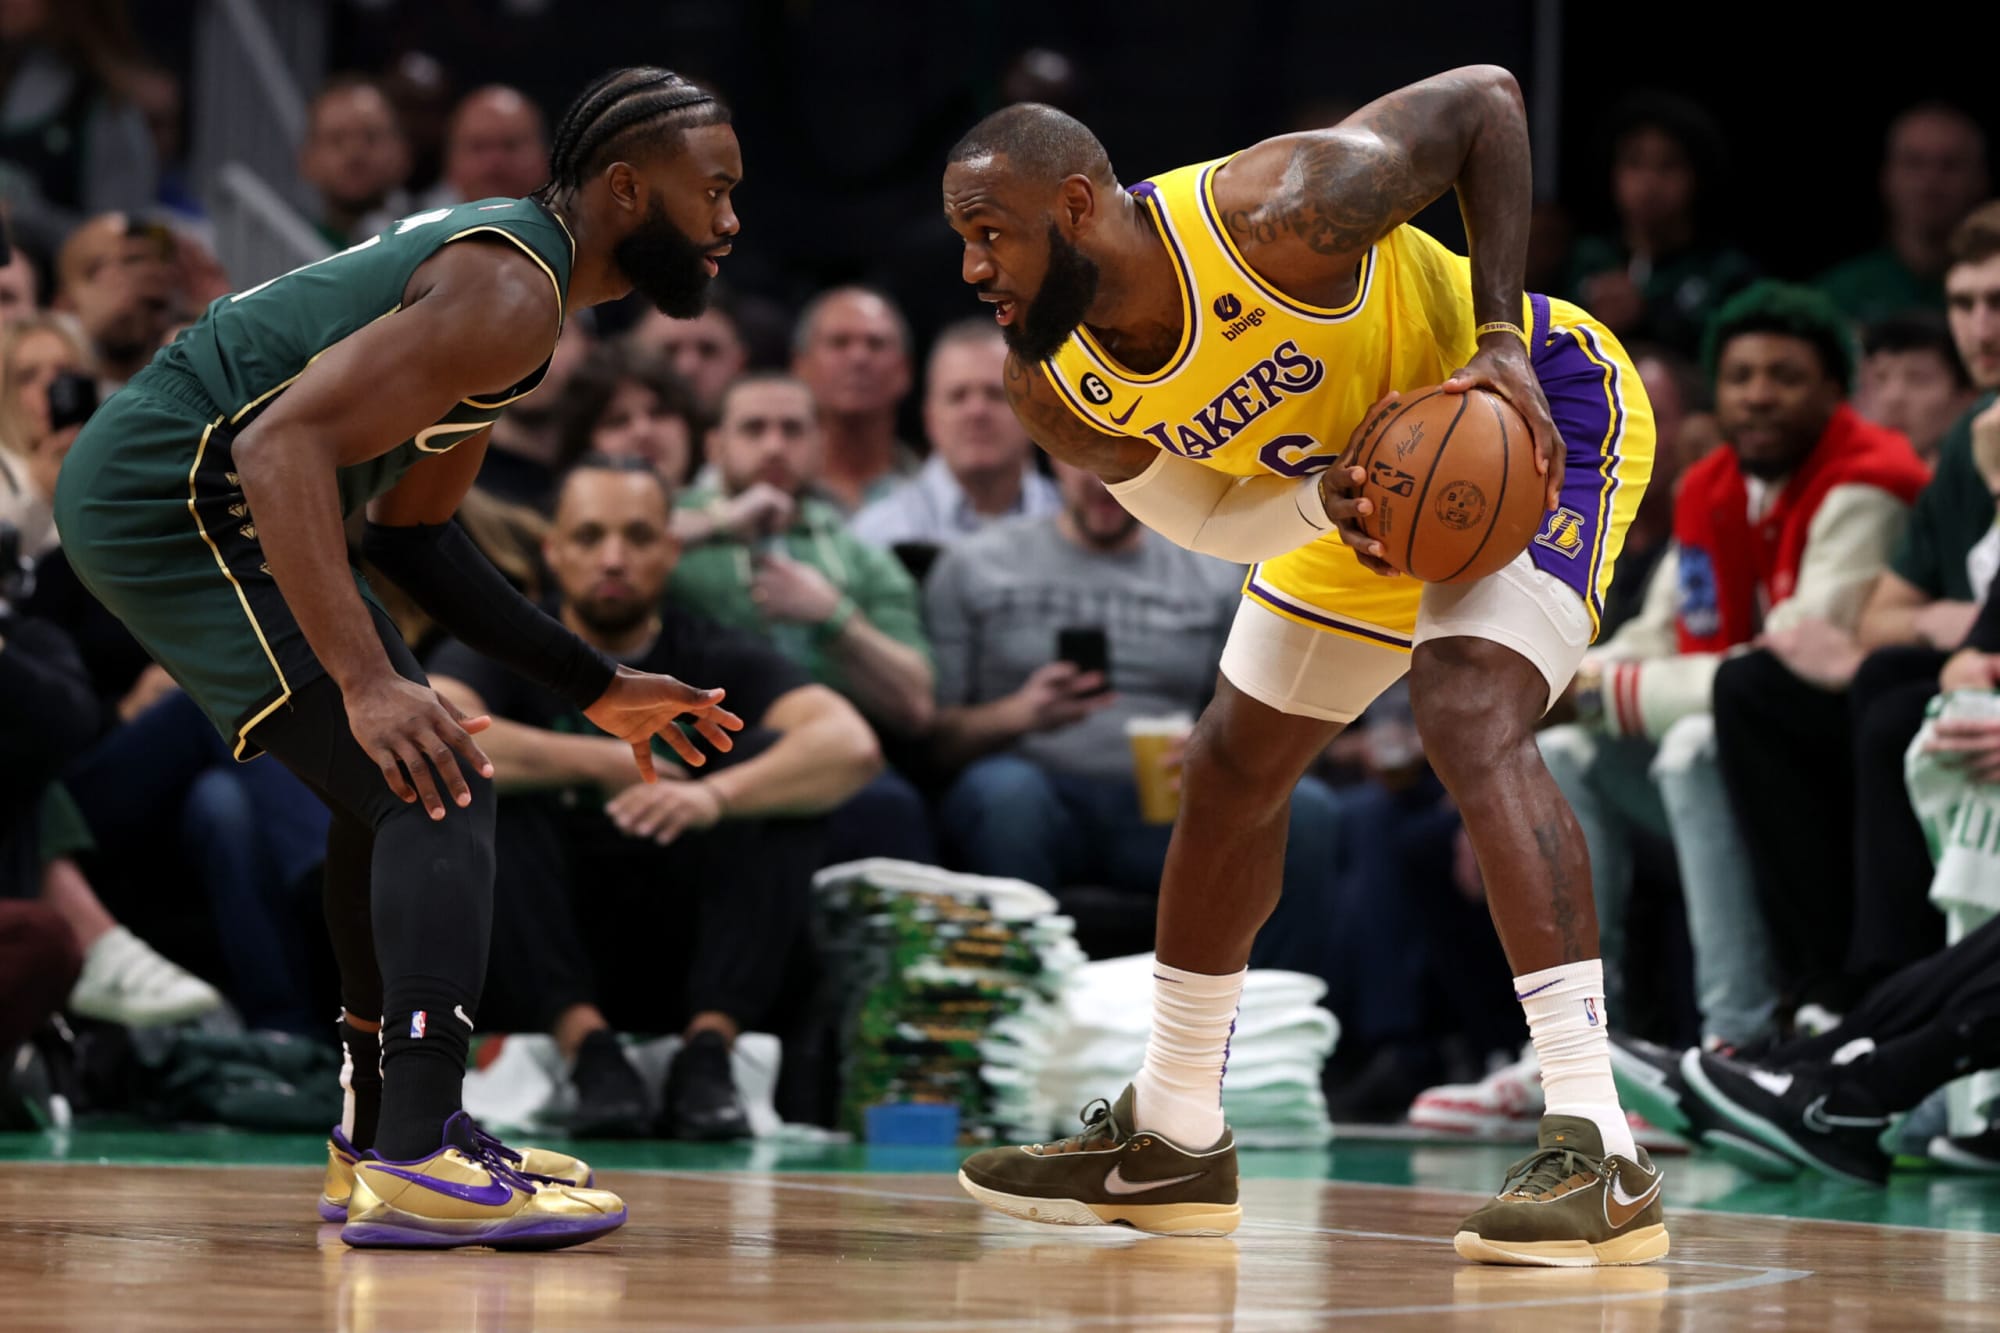 LeBron James' uncertain future adds excitement to the Celtics vs Lakers